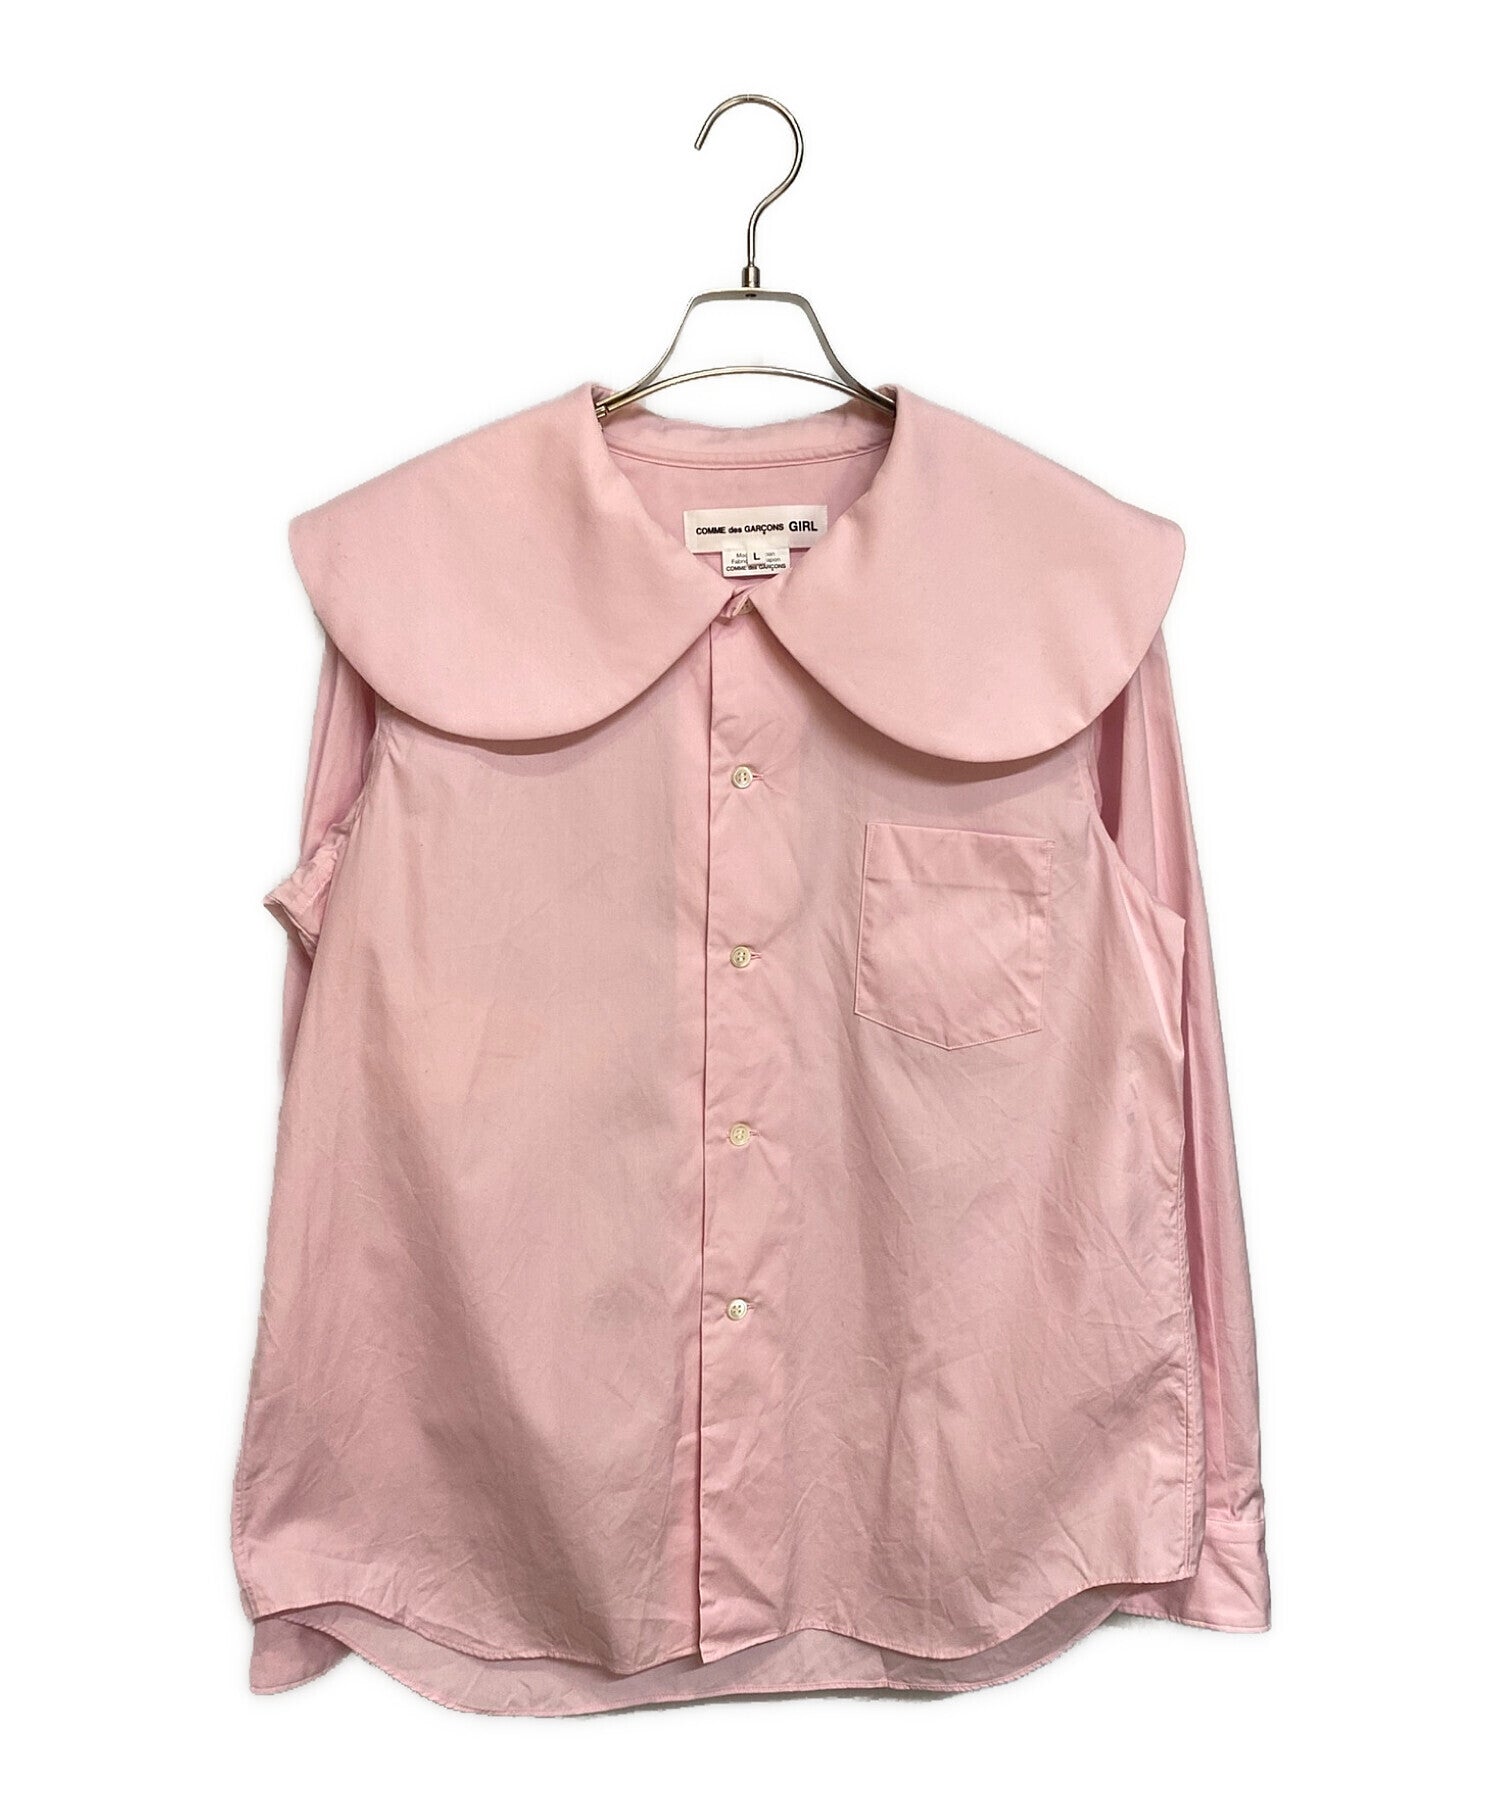 [Pre-owned] COMME des GARCONS GIRL 23SS Sailor collar blouse NK-B007